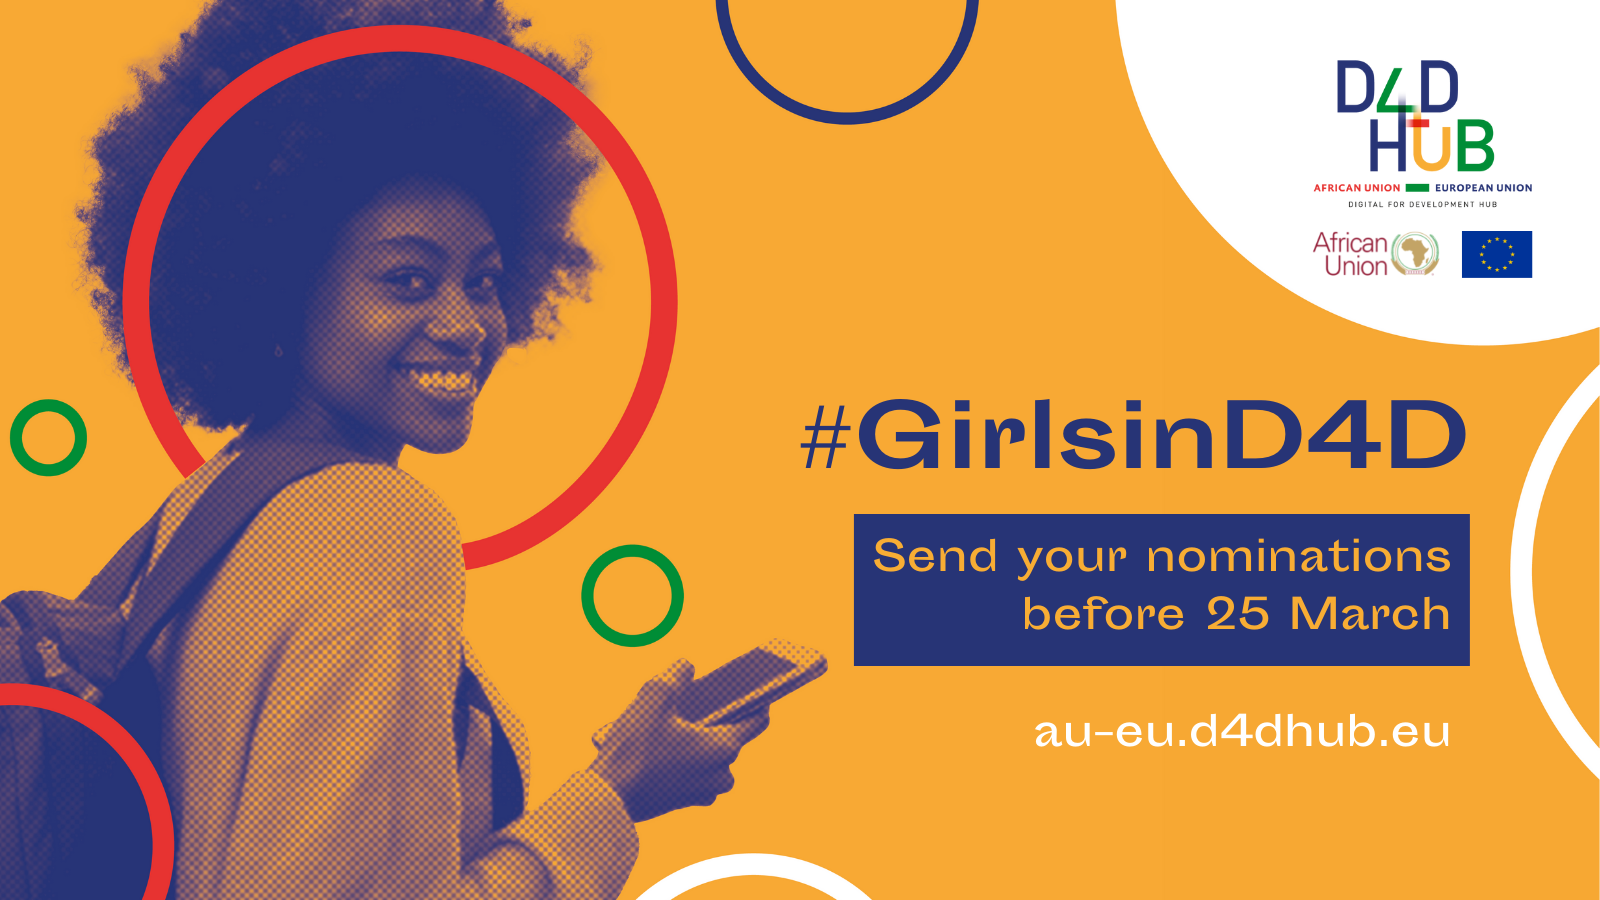 AU-EU Digital for Development Hub announces new #GirlsinD4D campaign